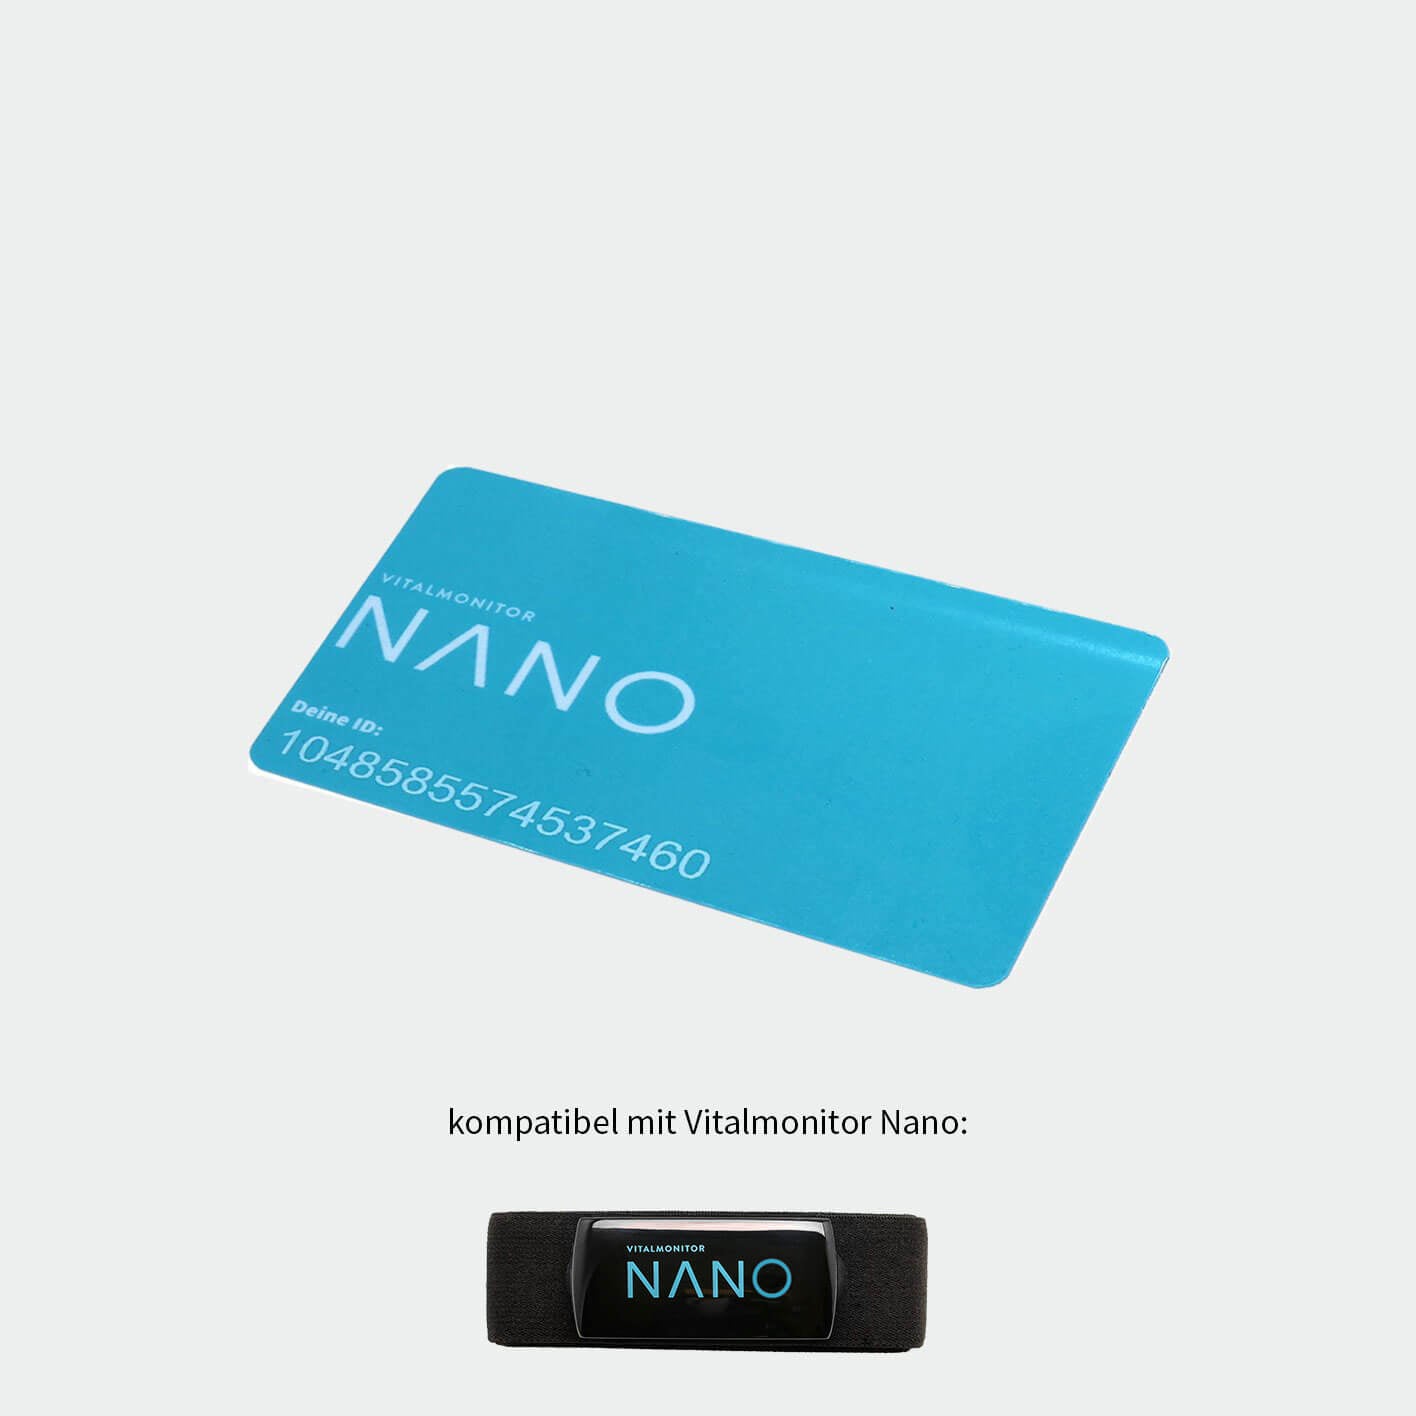 Vitalmonitor Nano ID Karte